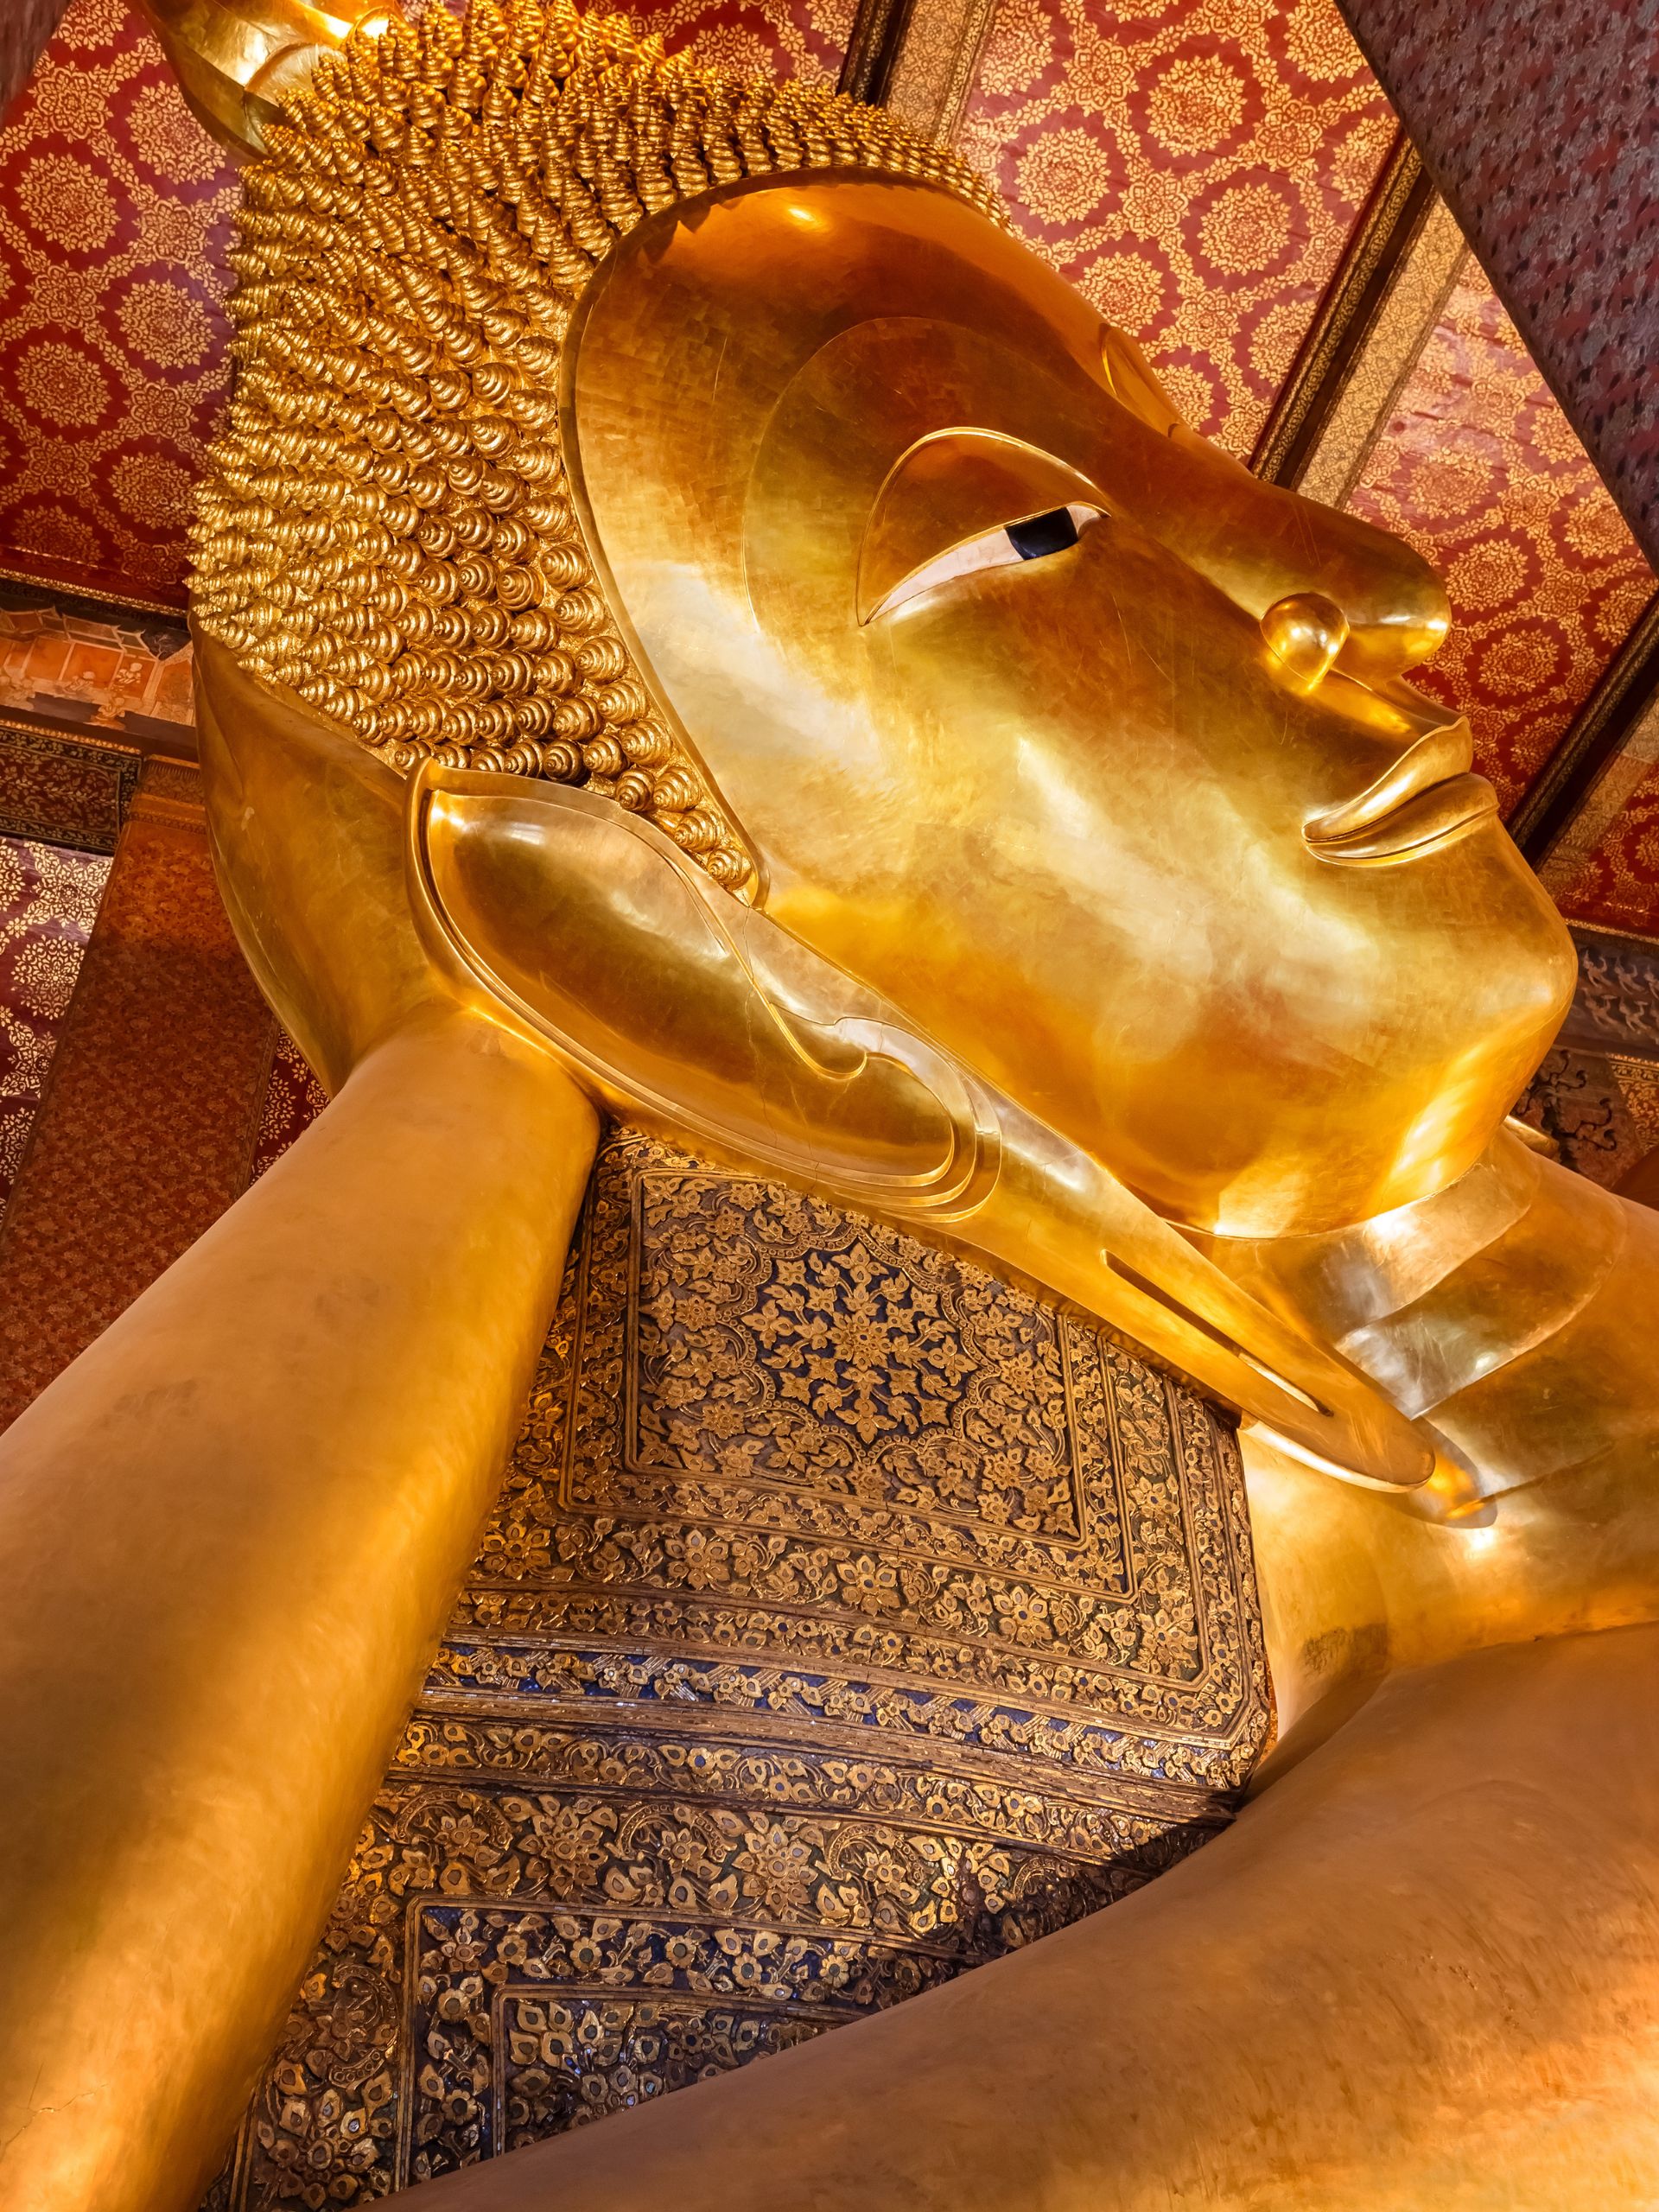 The Reclining Buddha at Wat Pho Temple